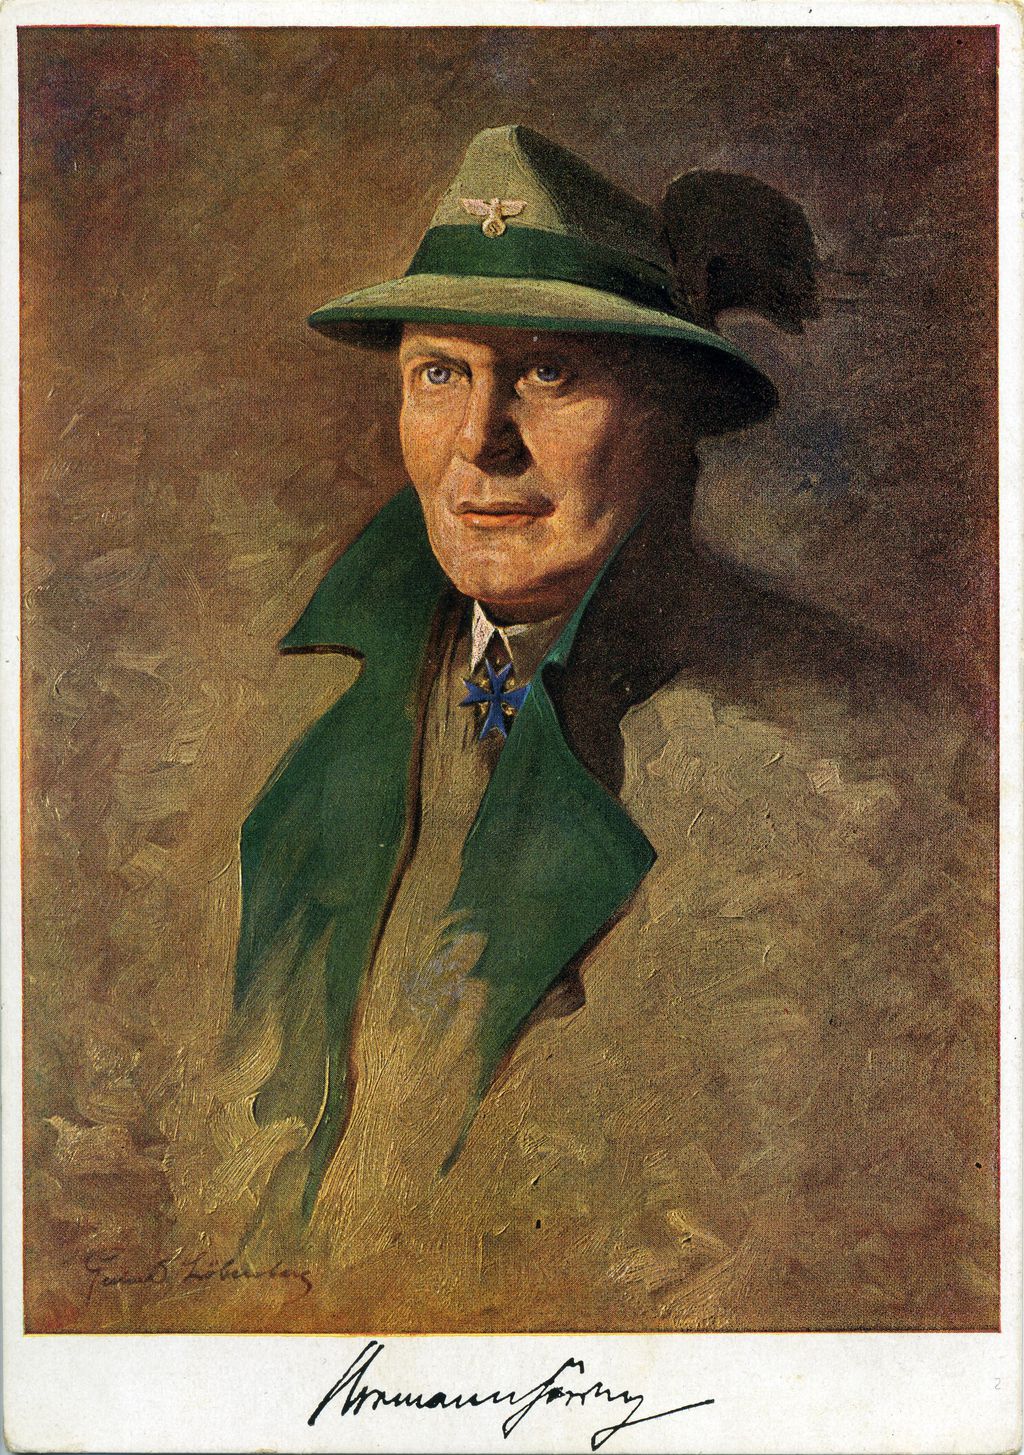 Exponat: Postkarte: Löbenberg, Gerhard "Hermann Göring", 1939